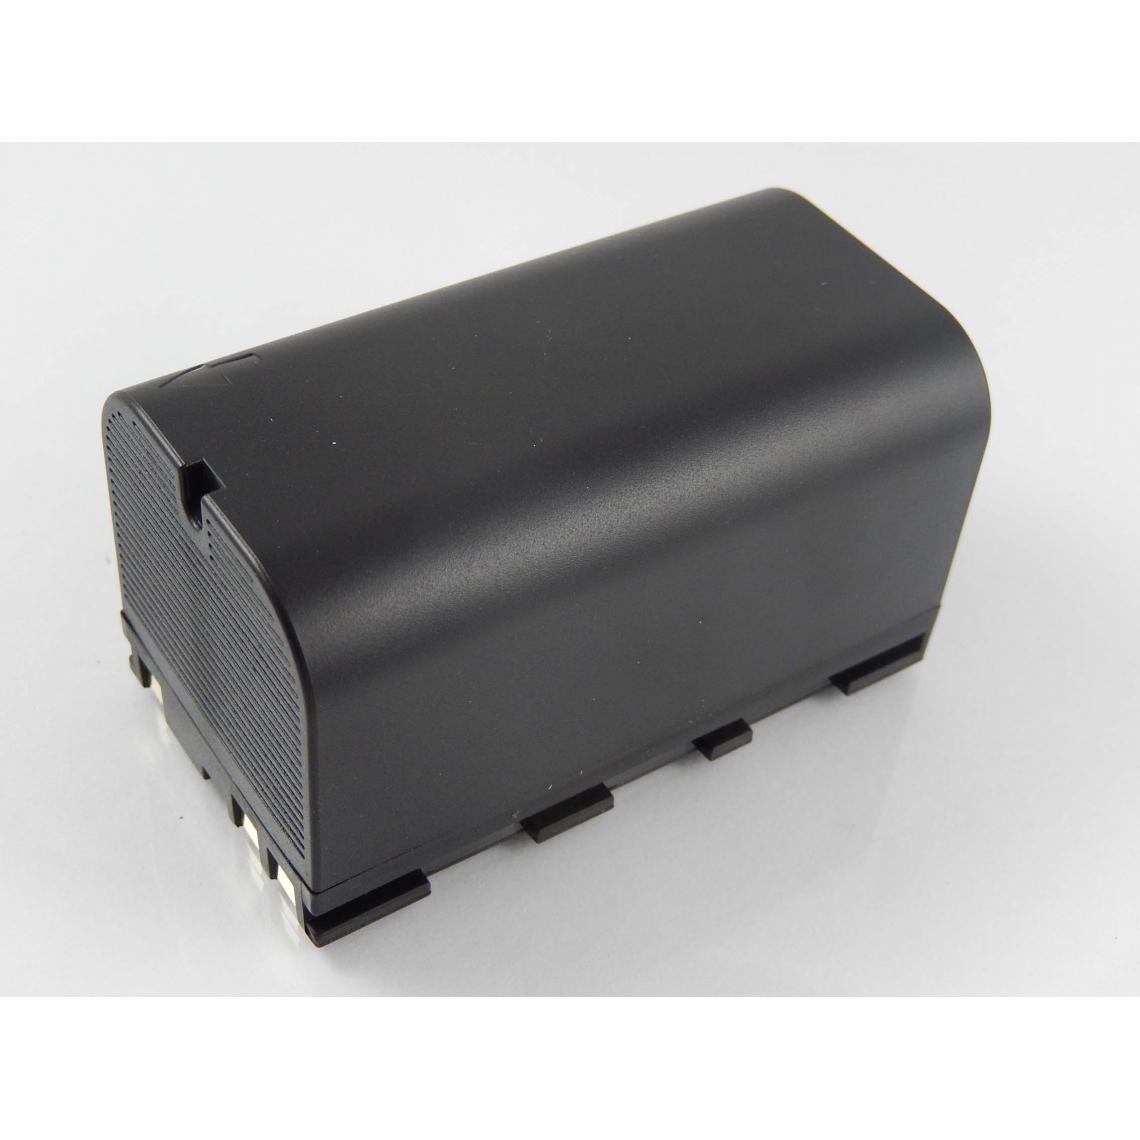 Vhbw - vhbw Batterie compatible avec Leica TC1102, TC1102C, TC1200 dispositif de mesure laser, outil de mesure (5600mAh, 7,4V, Li-ion) - Piles rechargeables